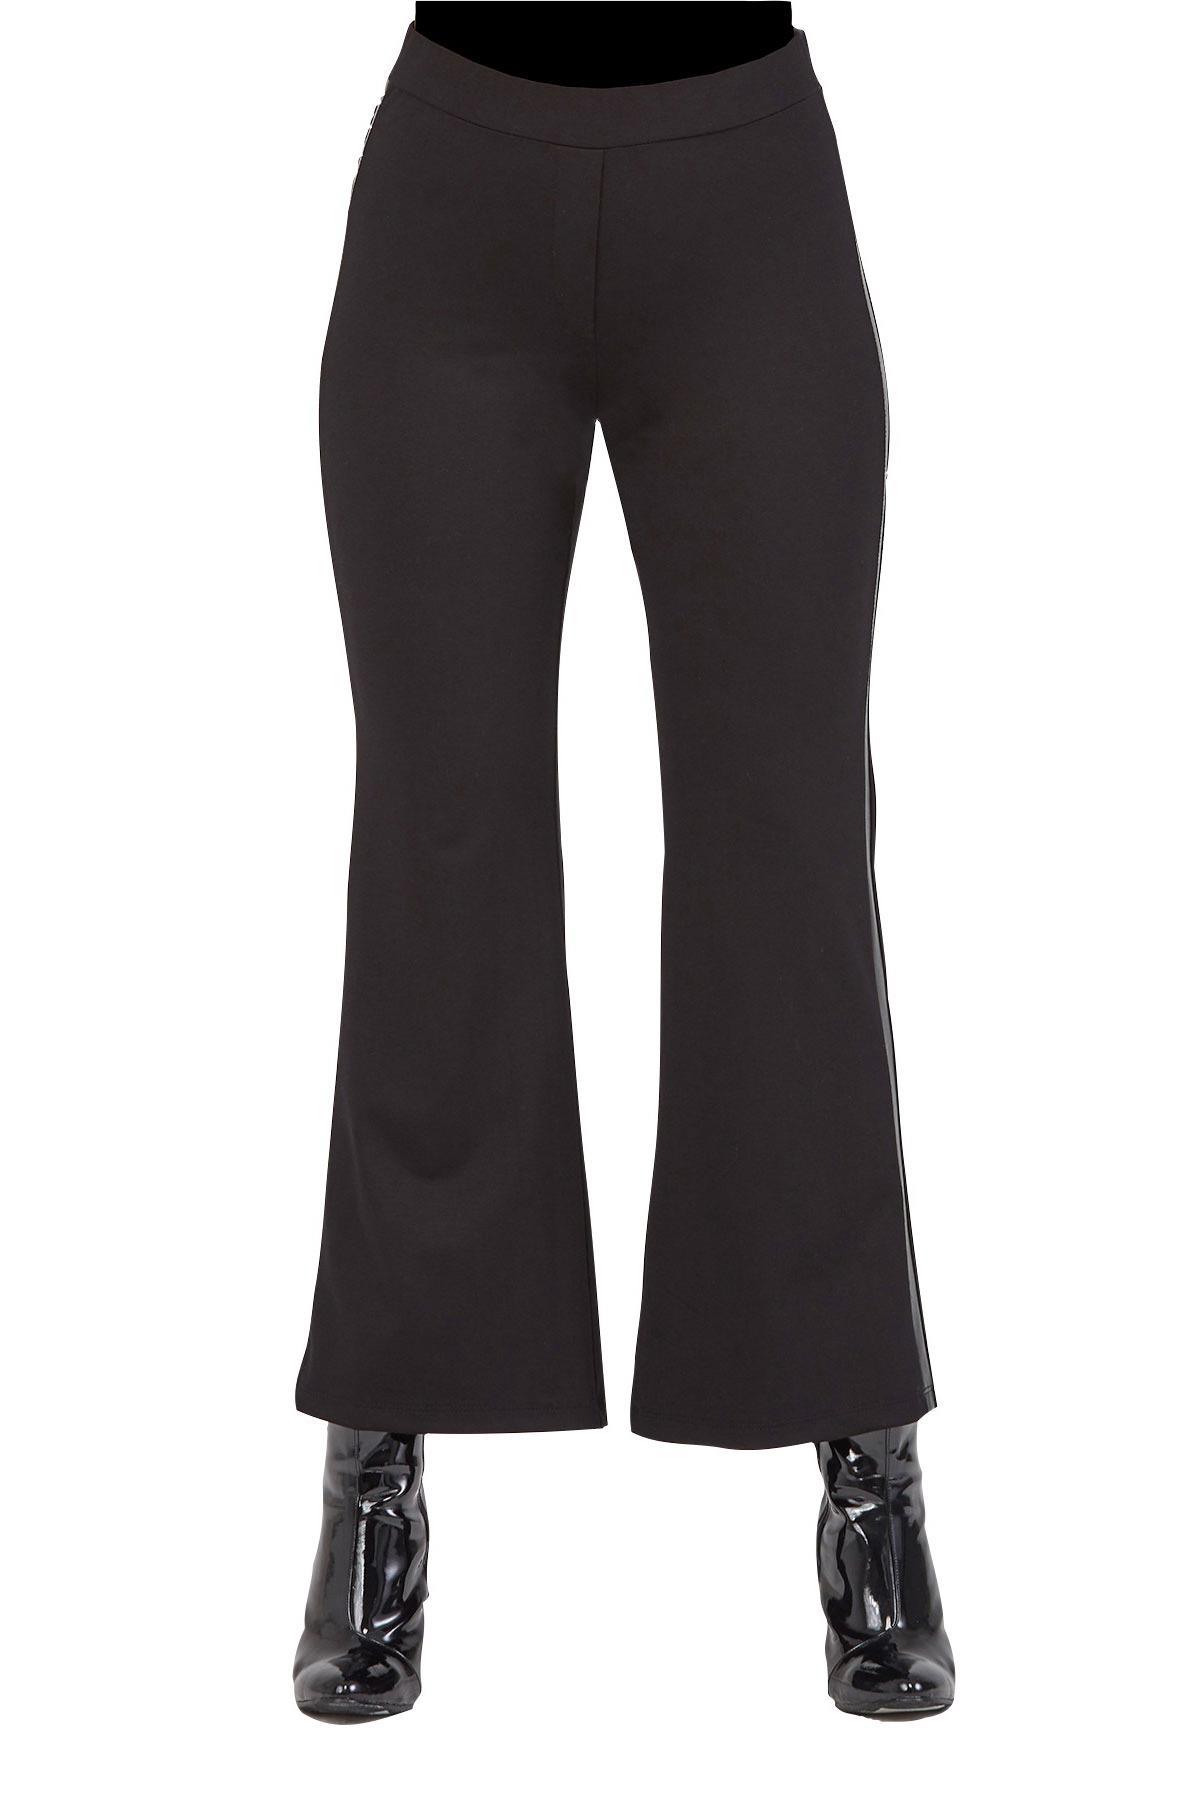 fierte-kadin-buyuk-beden-pantolon-lm52110-yuksek-elastik-bel-ispanyol-paca-deri-serit-siyah-26506.jpg